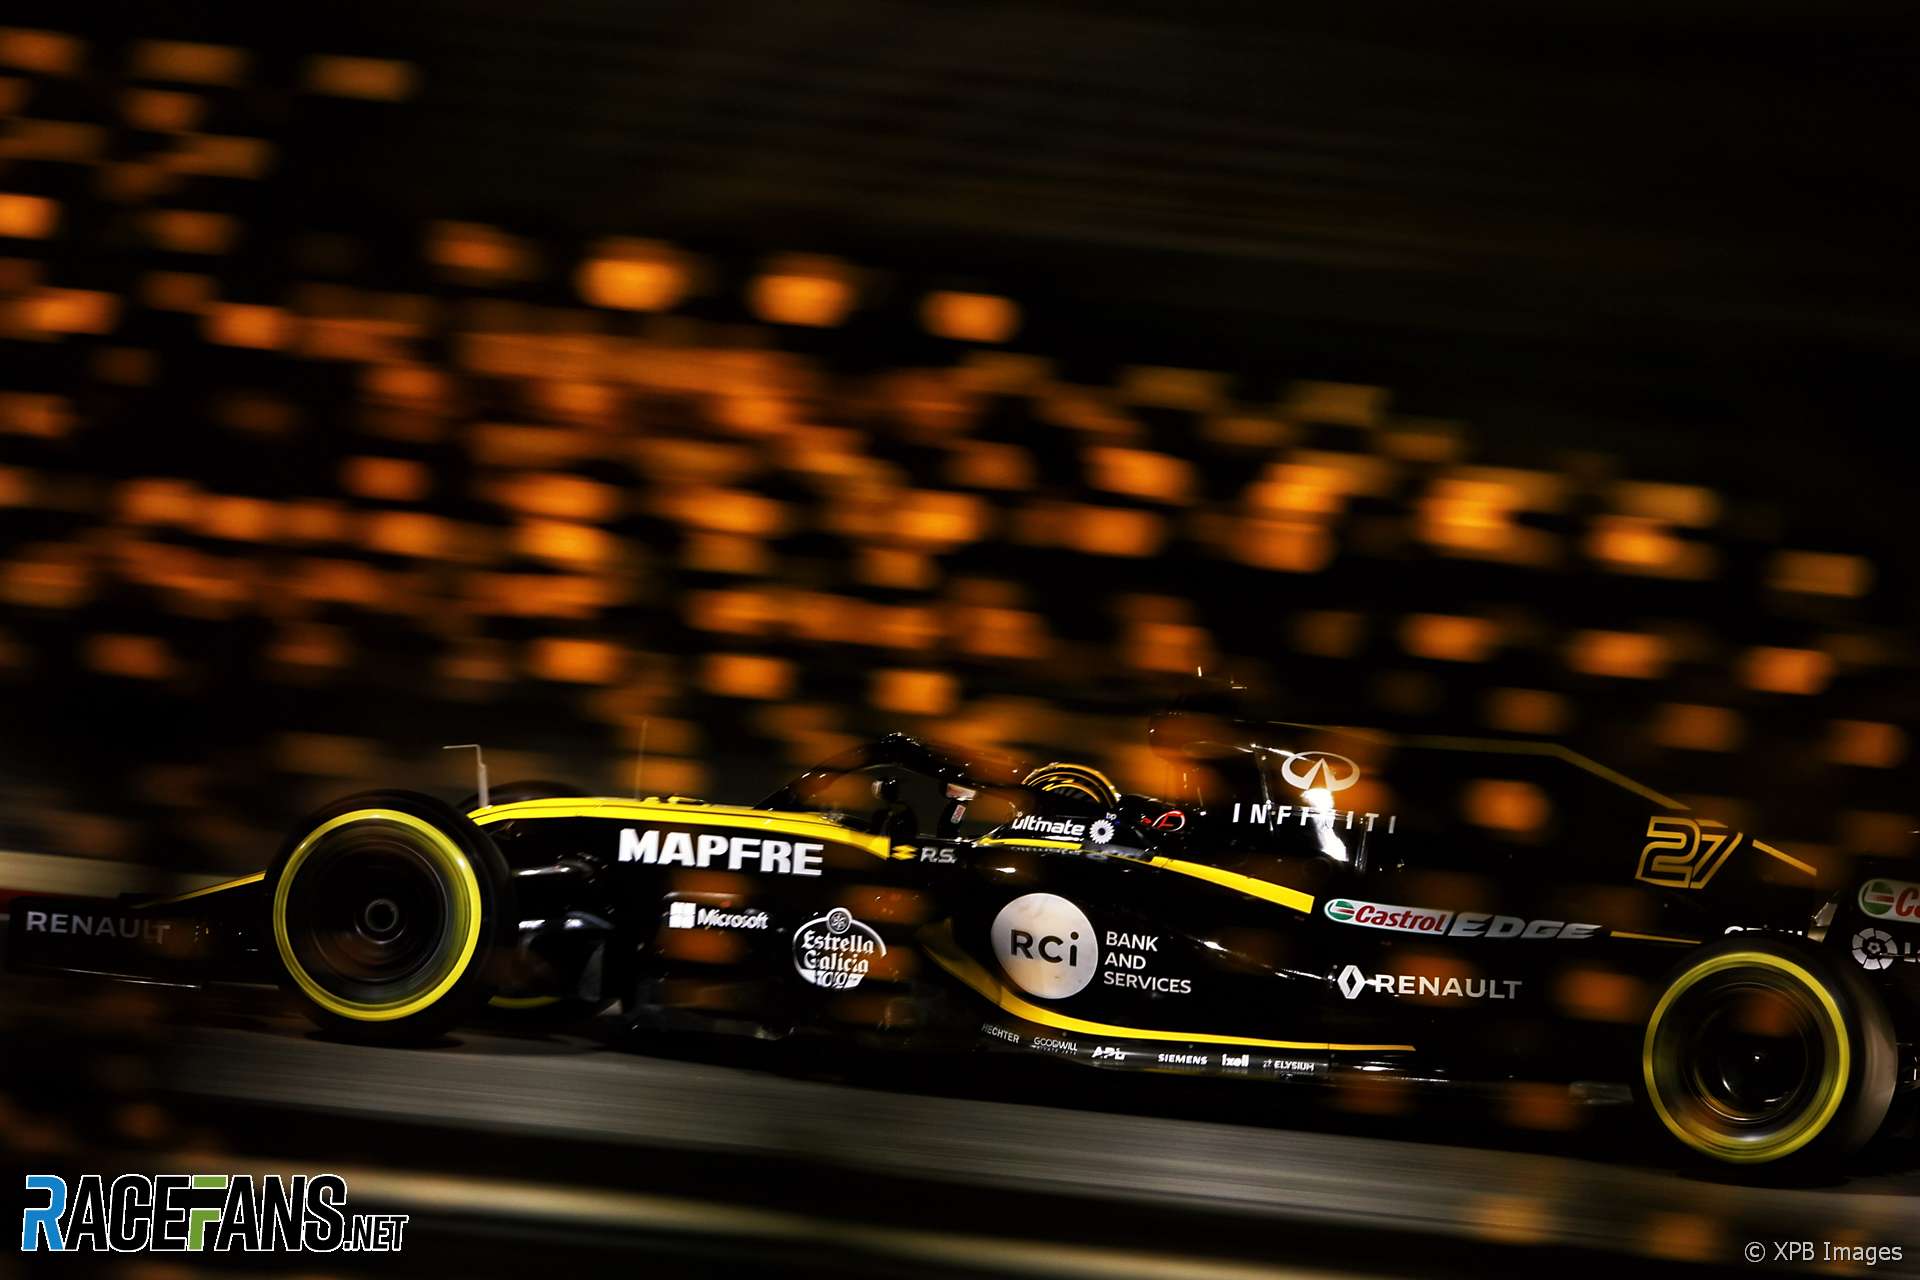 Nico Hulkenberg, Renault, Bahrain International Circuit, 2018 · RaceFans